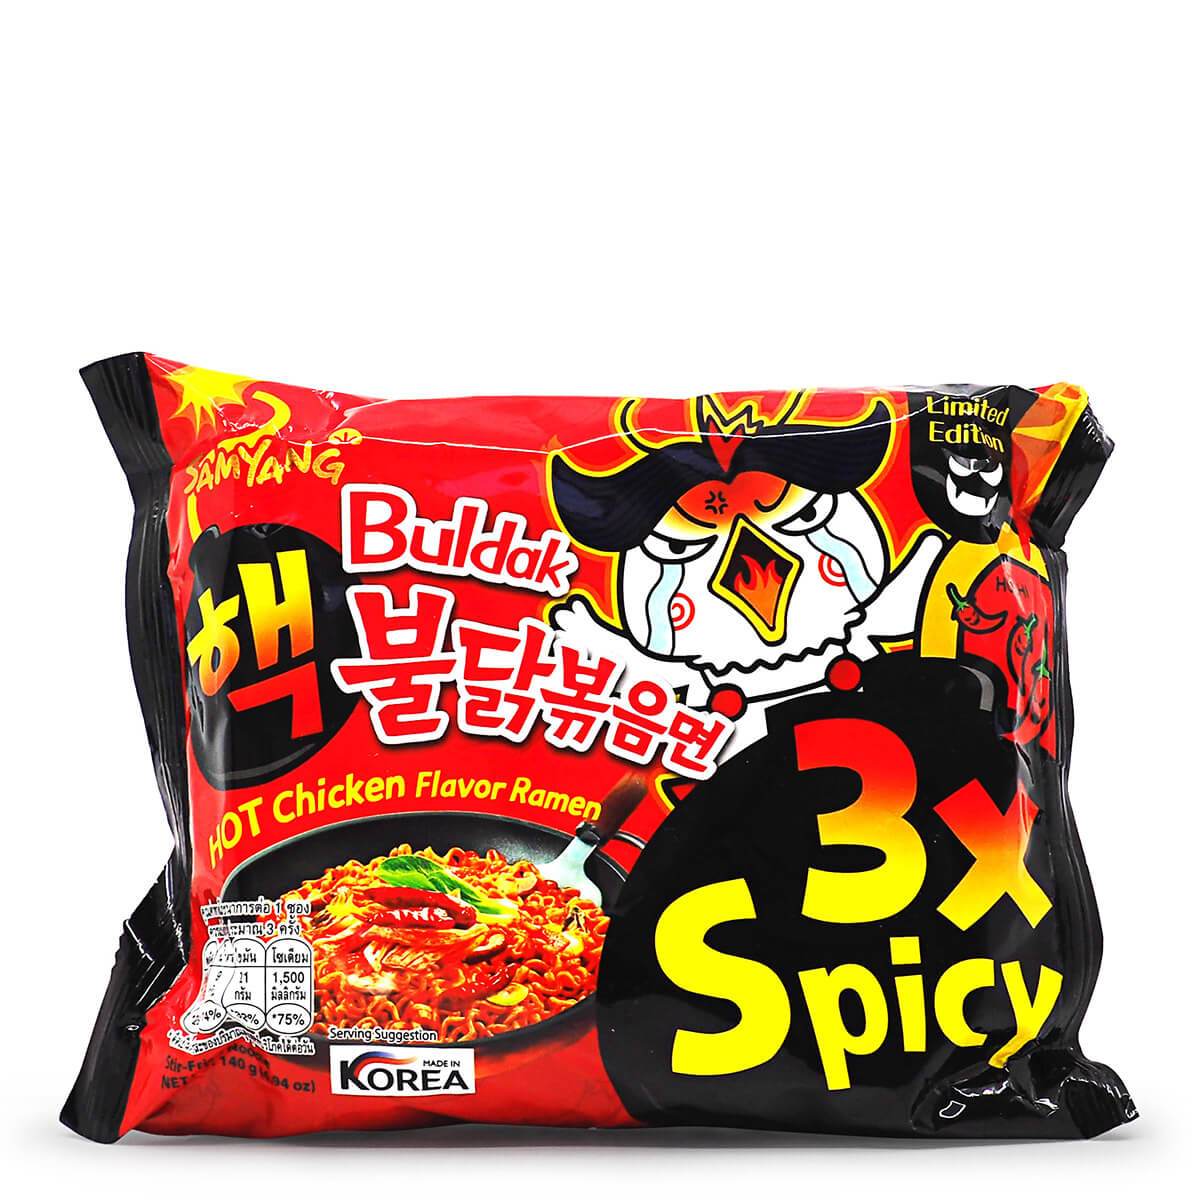 SamYang Hot Chicken Raman 3x Spicy Instant Noodles 140g